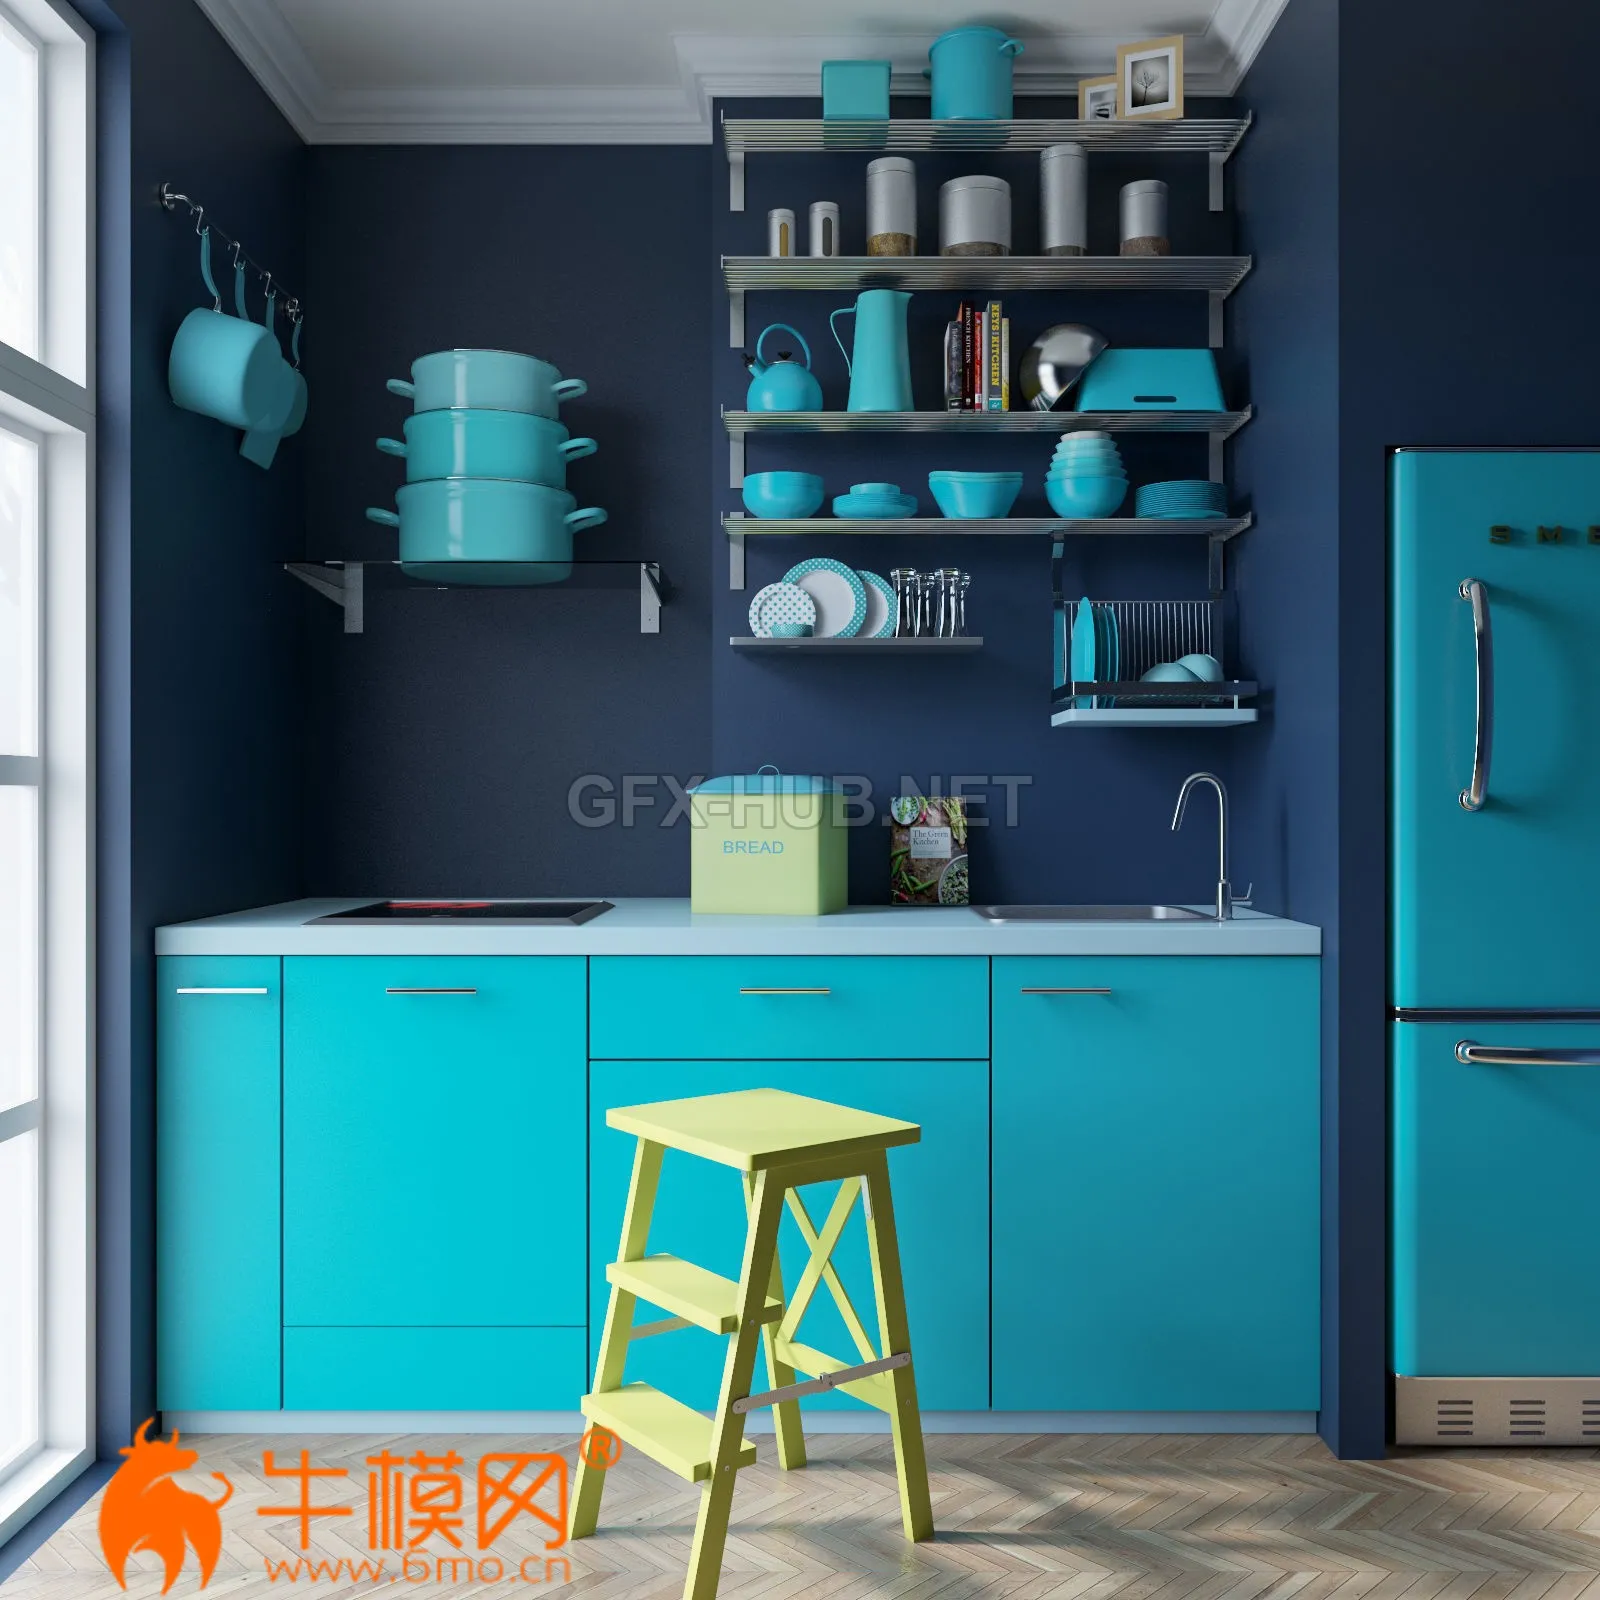 Blue kitchen by IKEA 3D mode – 5068